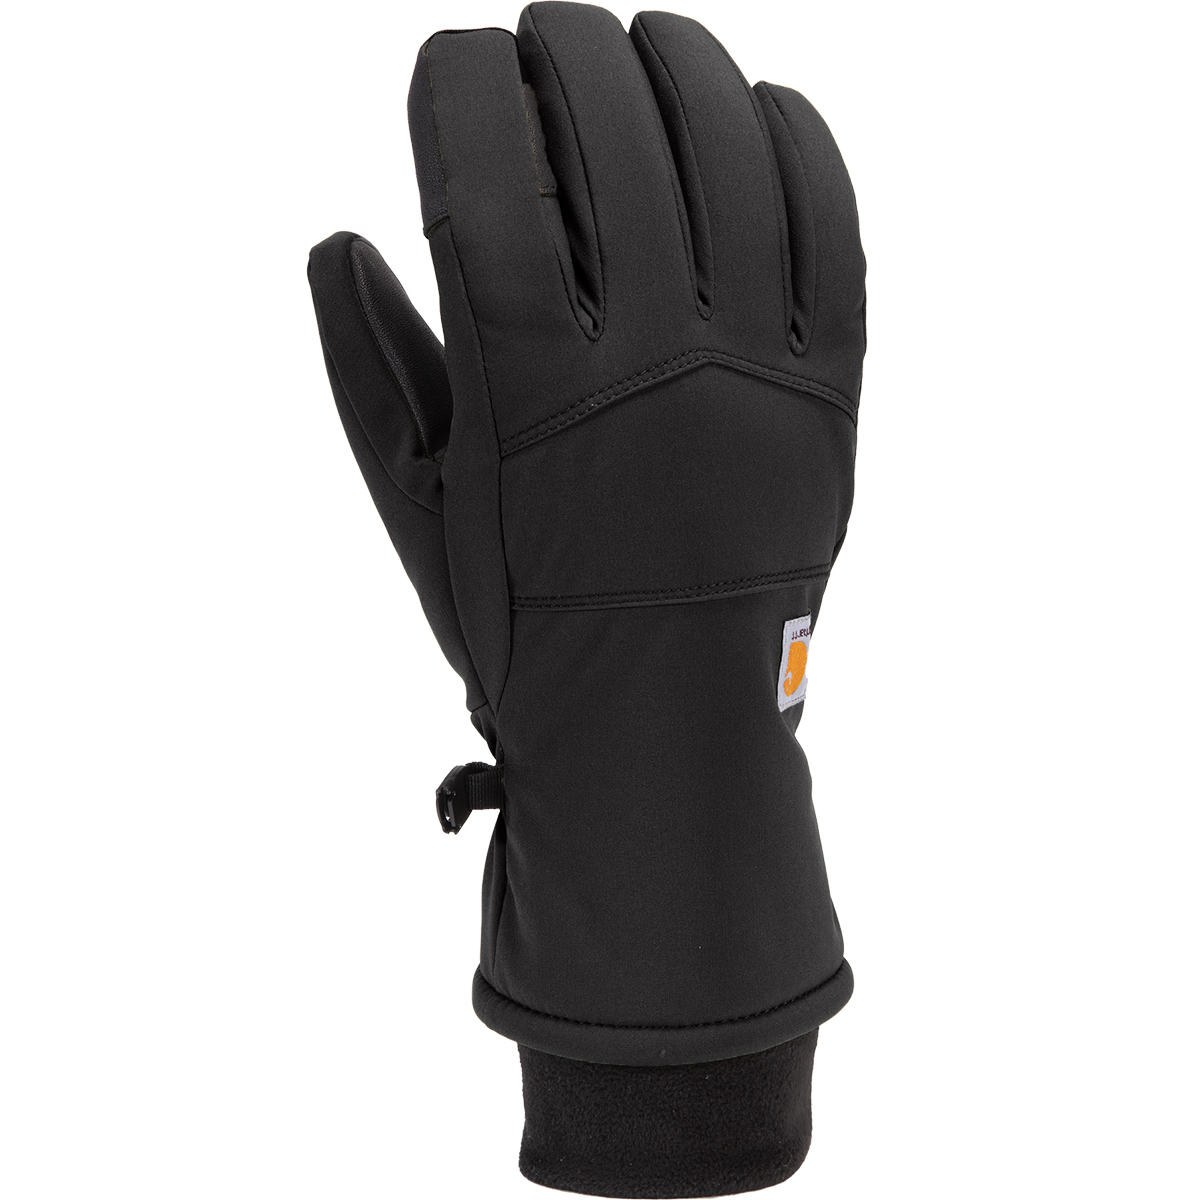 Carhartt Women's Storm Defender Insulated Gloves